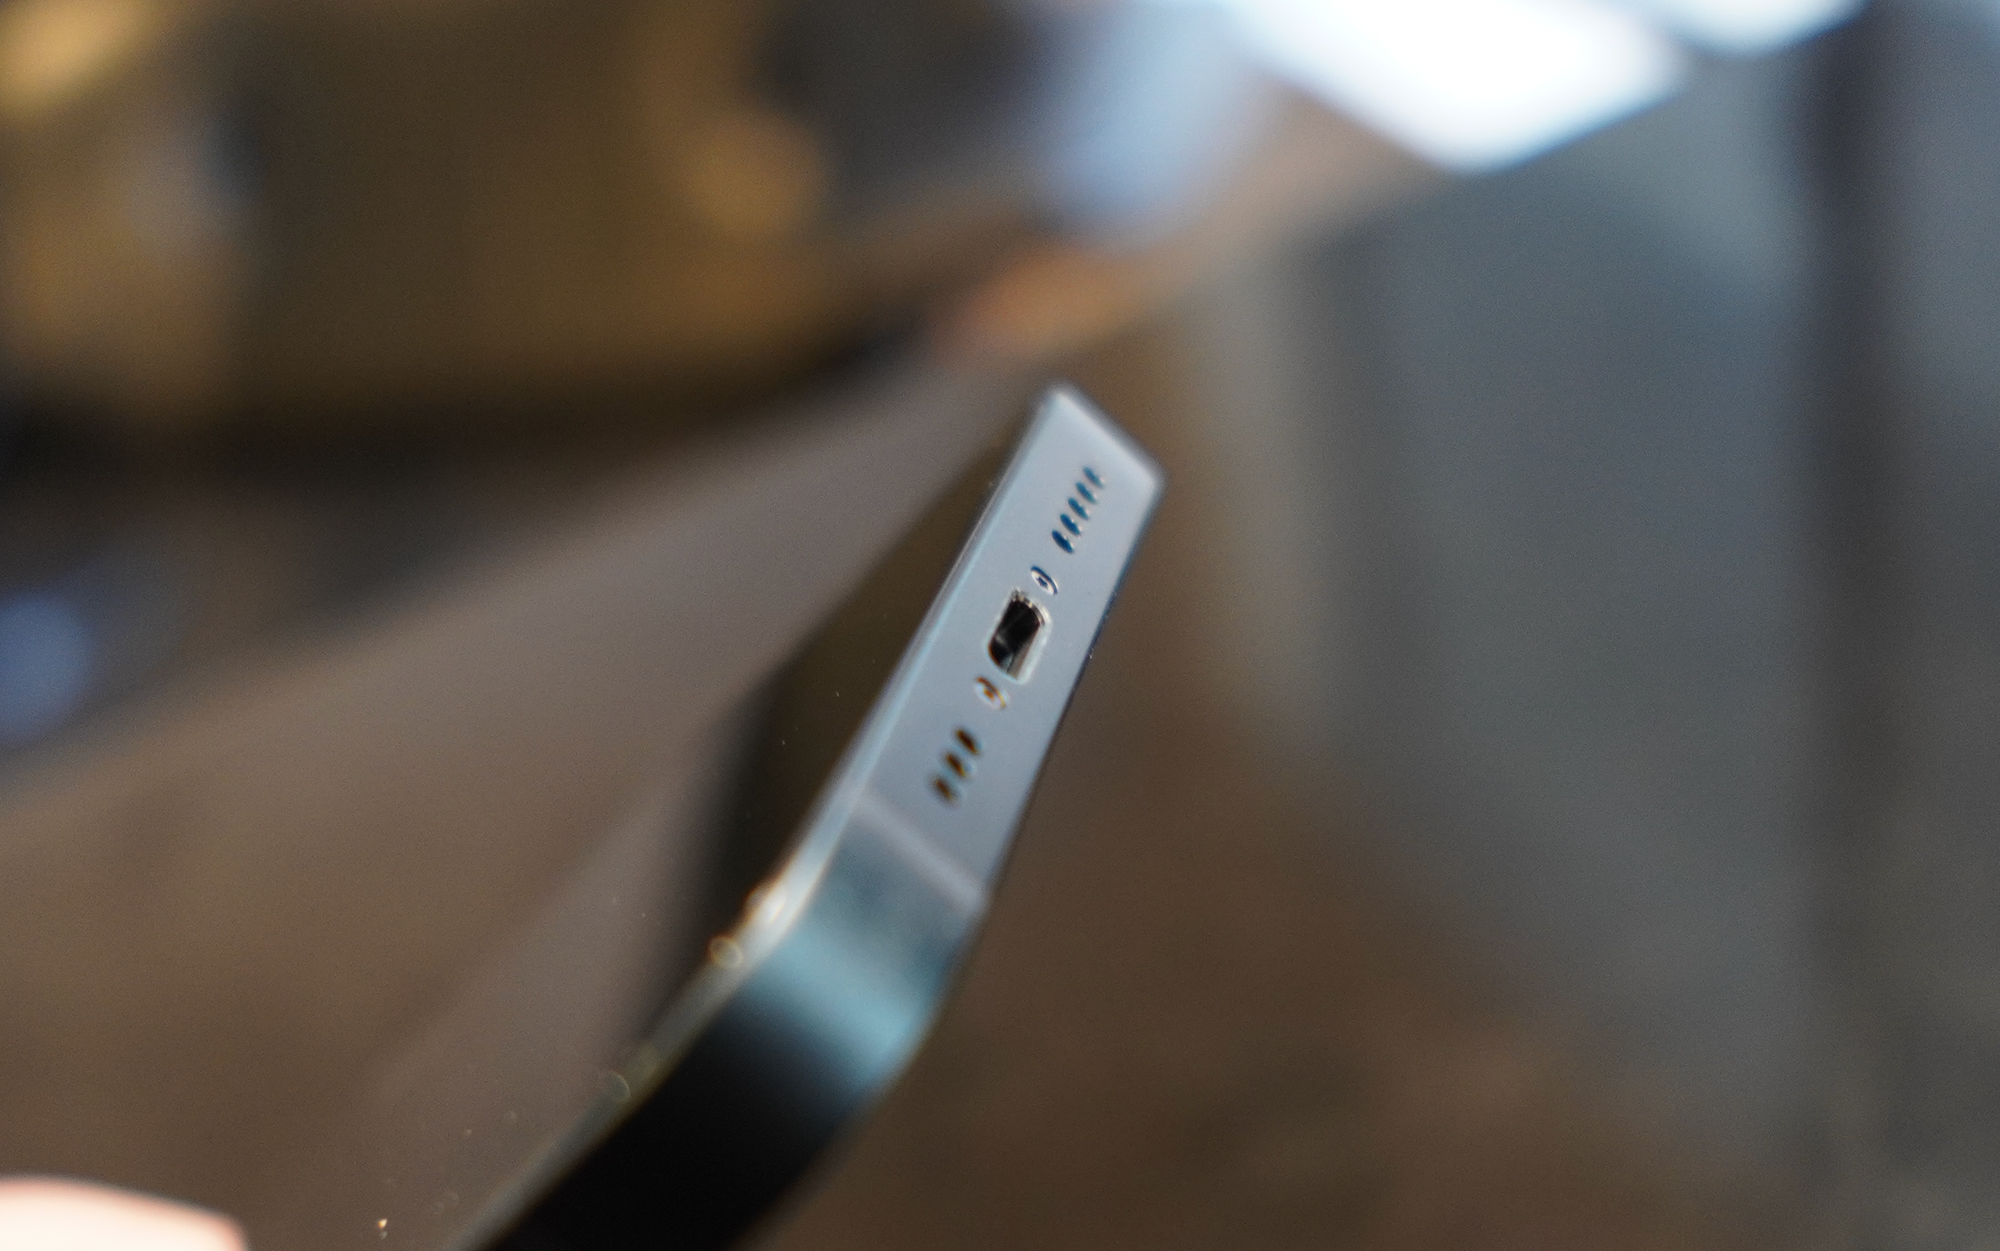 A close shot of an iPhone charging port